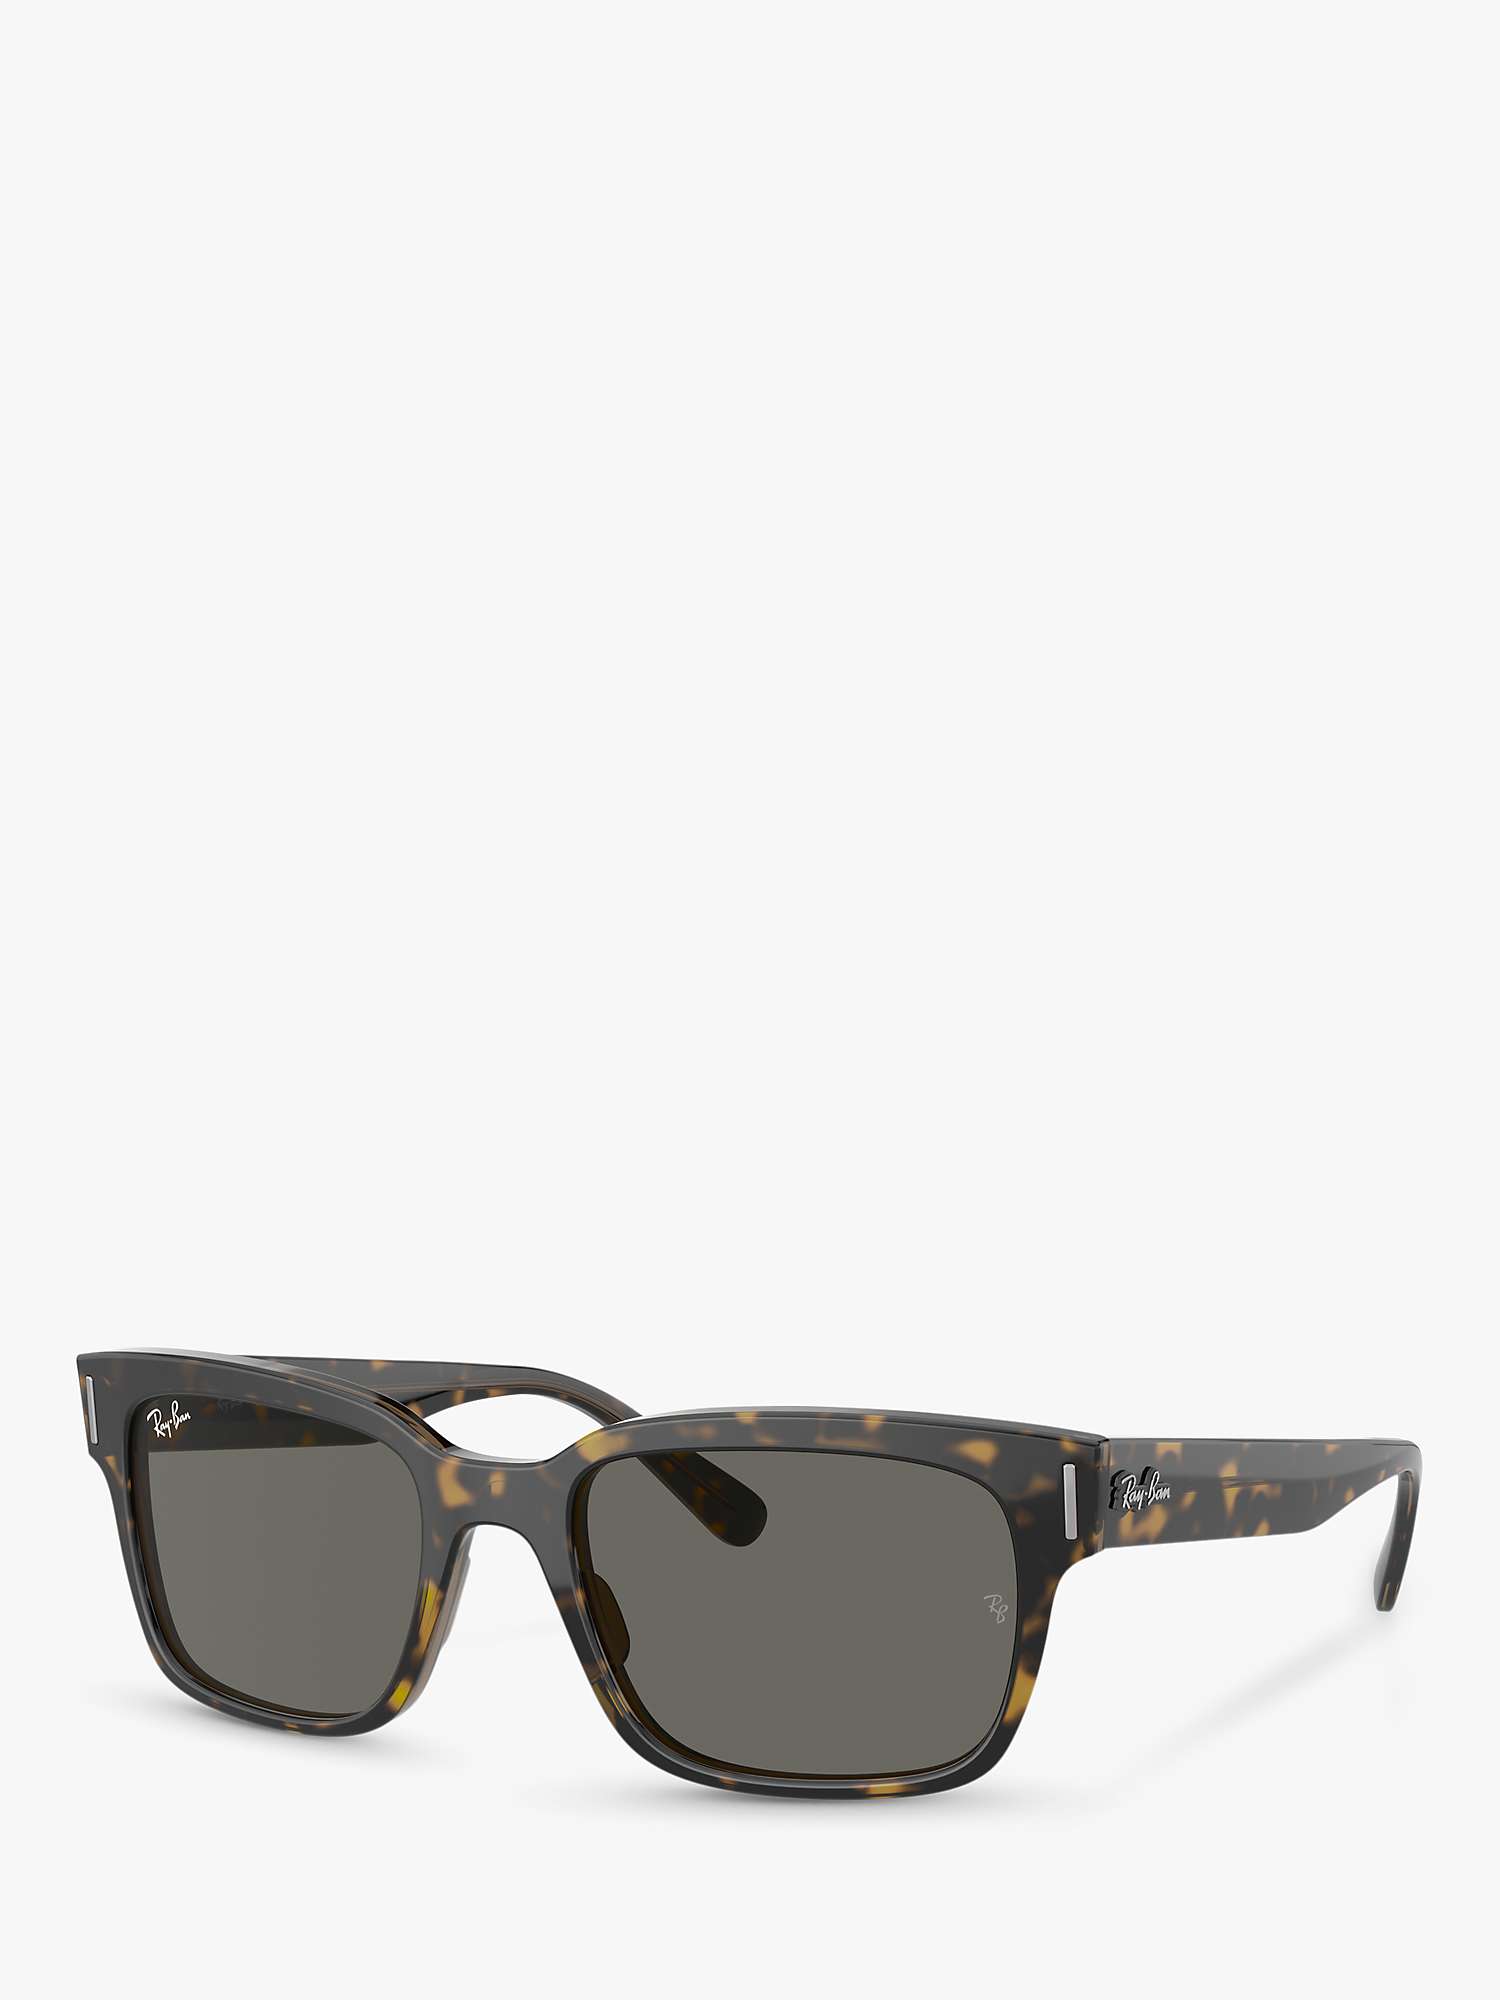 Buy Ray-Ban RB2190 Men's Square Sunglasses, Havana/Black Online at johnlewis.com